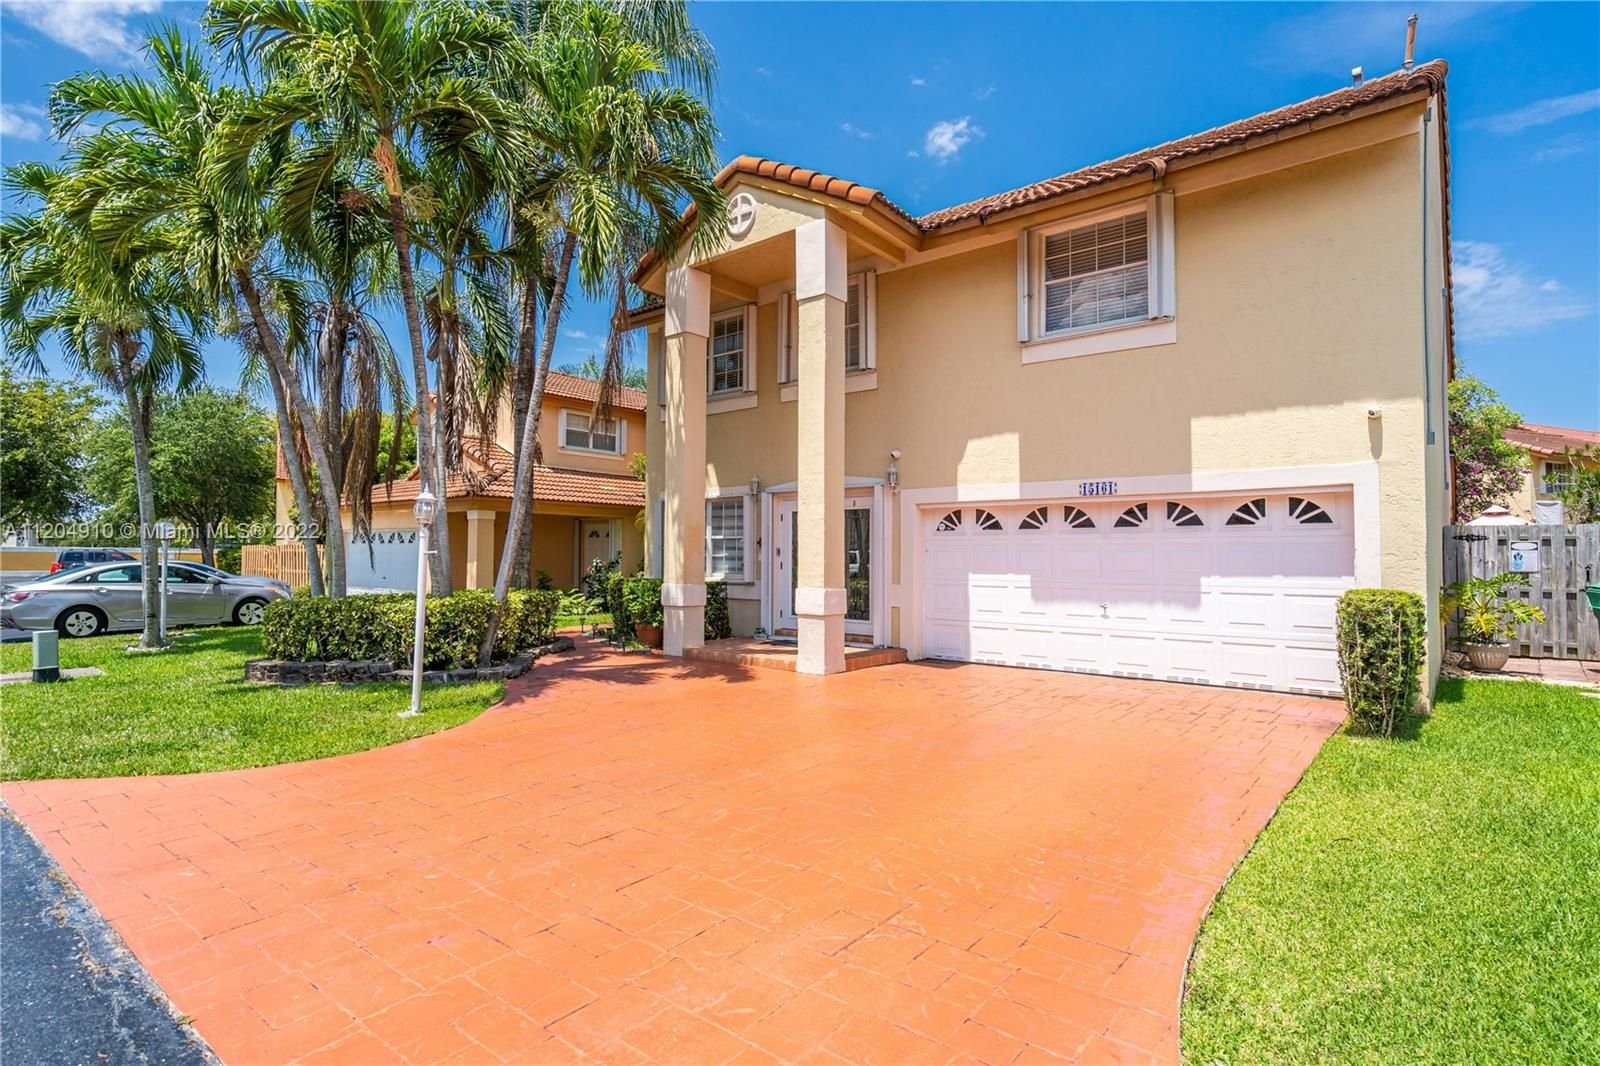 Real estate property located at 15161 113th St, Miami-Dade County, Miami, FL